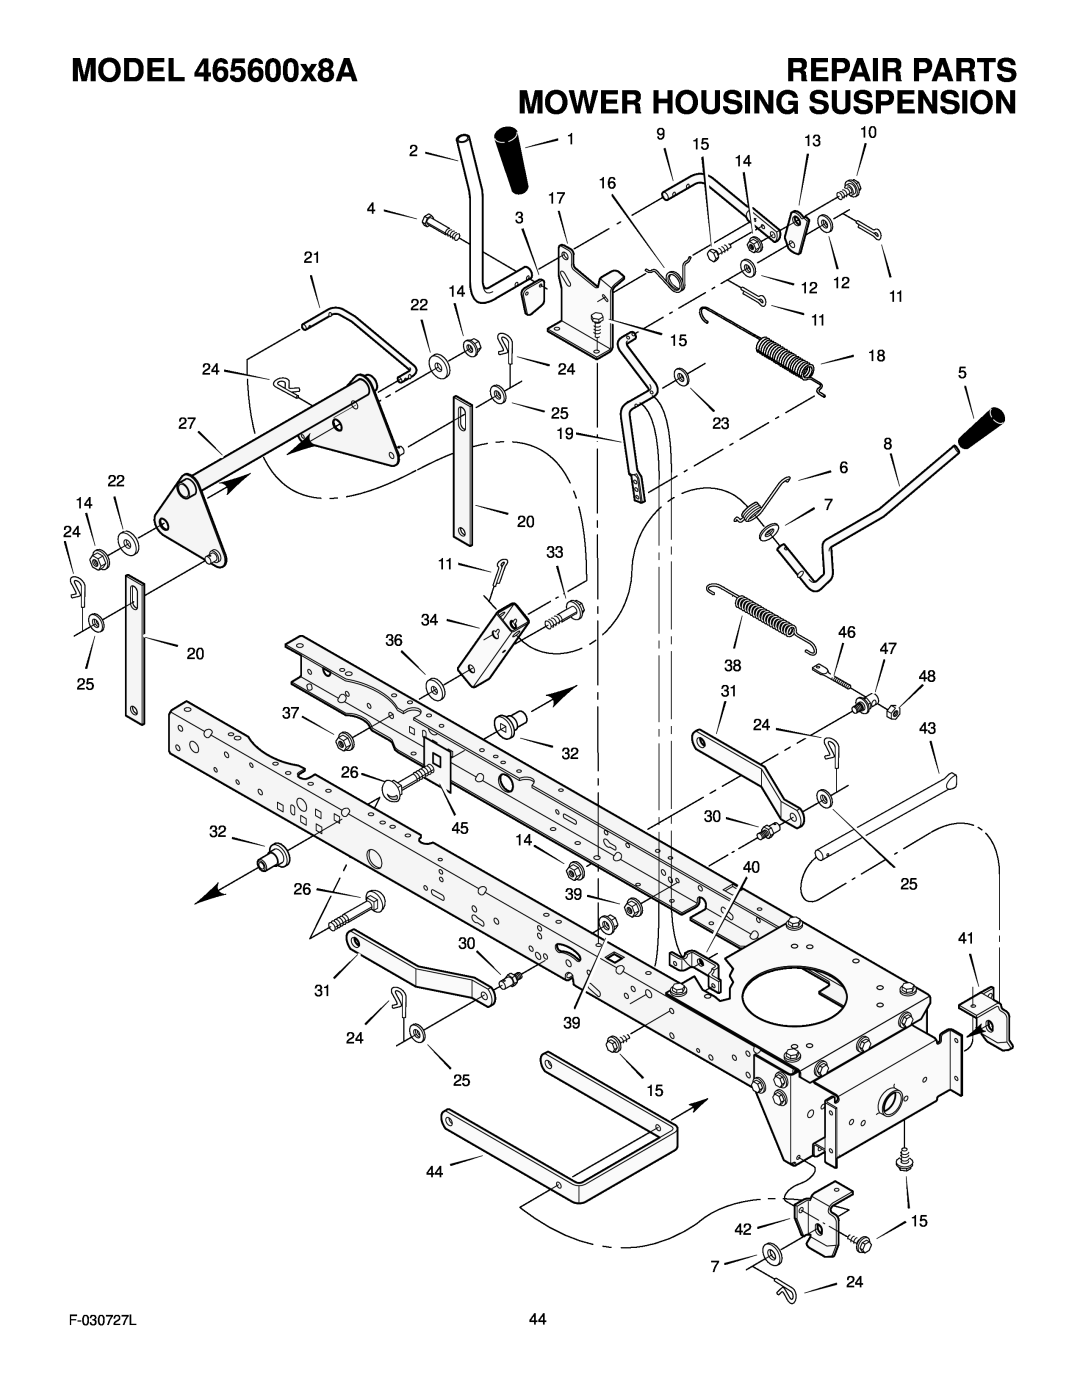 Murray manual Mower Housing Suspension, MODEL 465600x8A, Repair Parts, F-030727L 